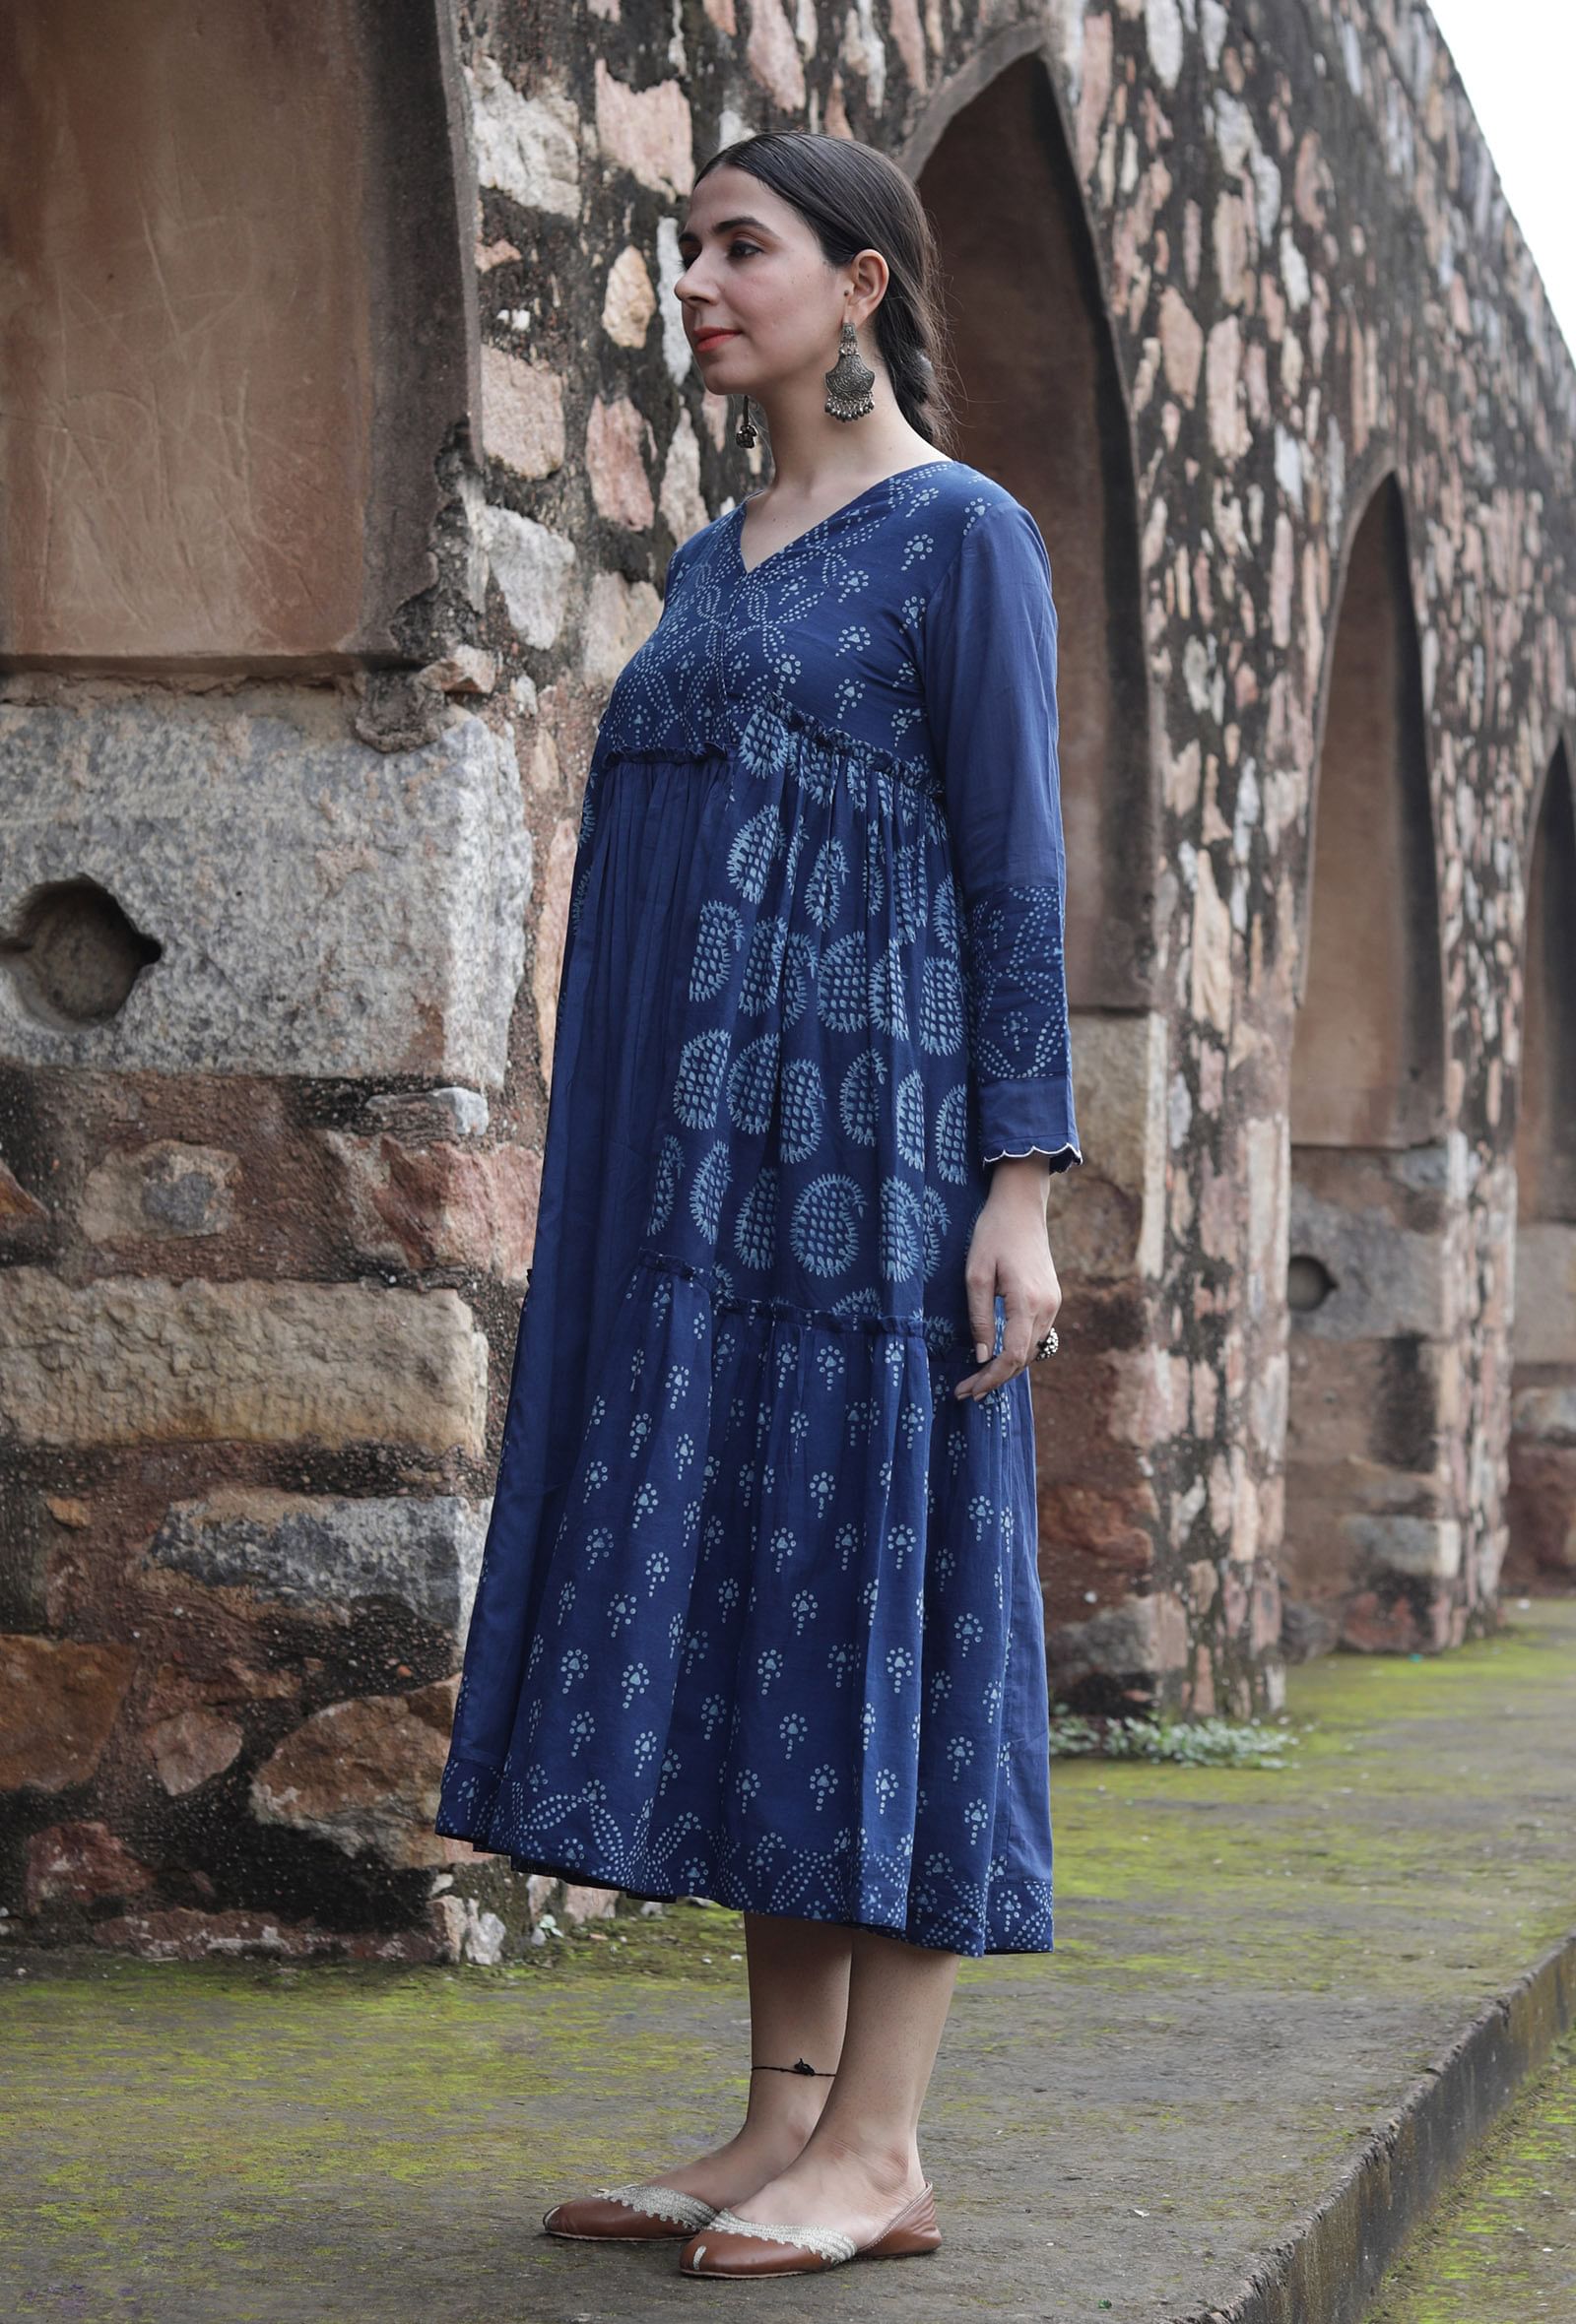 Buy Indigo Blue Printed Cotton Kurti Online in India | Colorauction